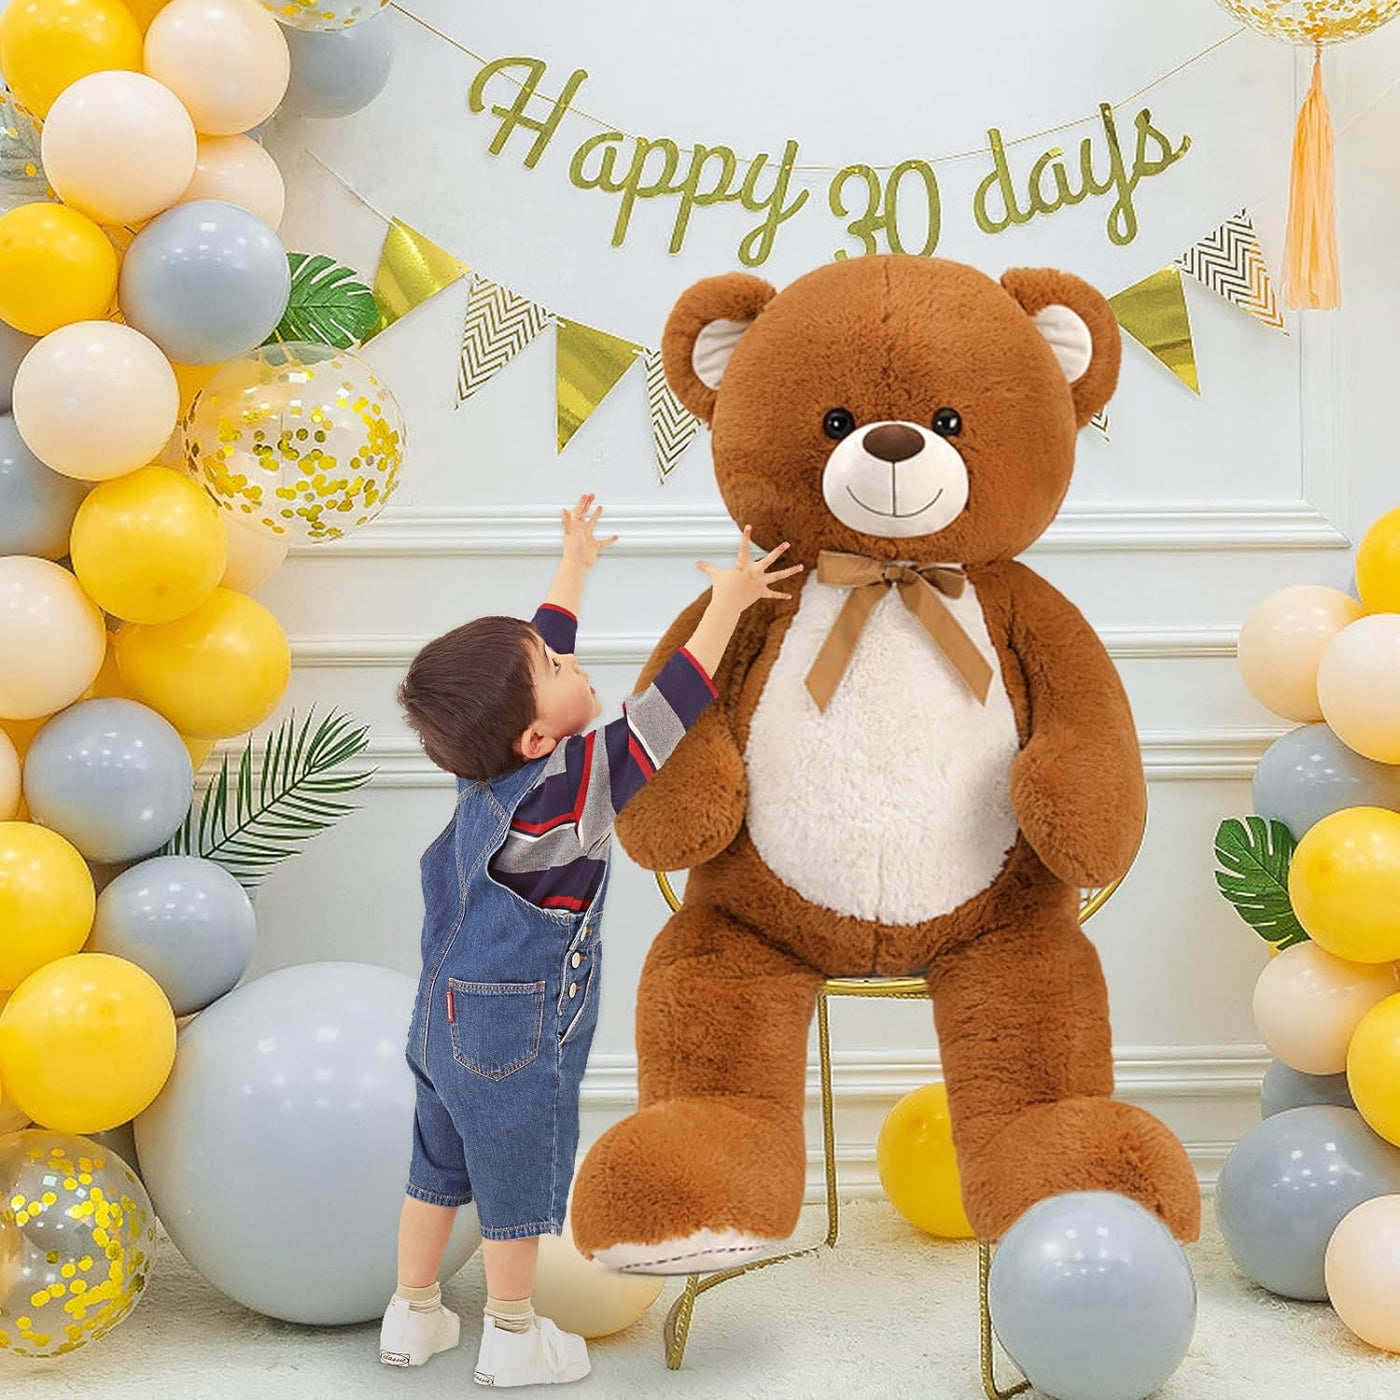 MorisMos Teddy Bear 130cm Giant Teddy Bear with Bow Fluffy Stuffed Animal Plush Toy